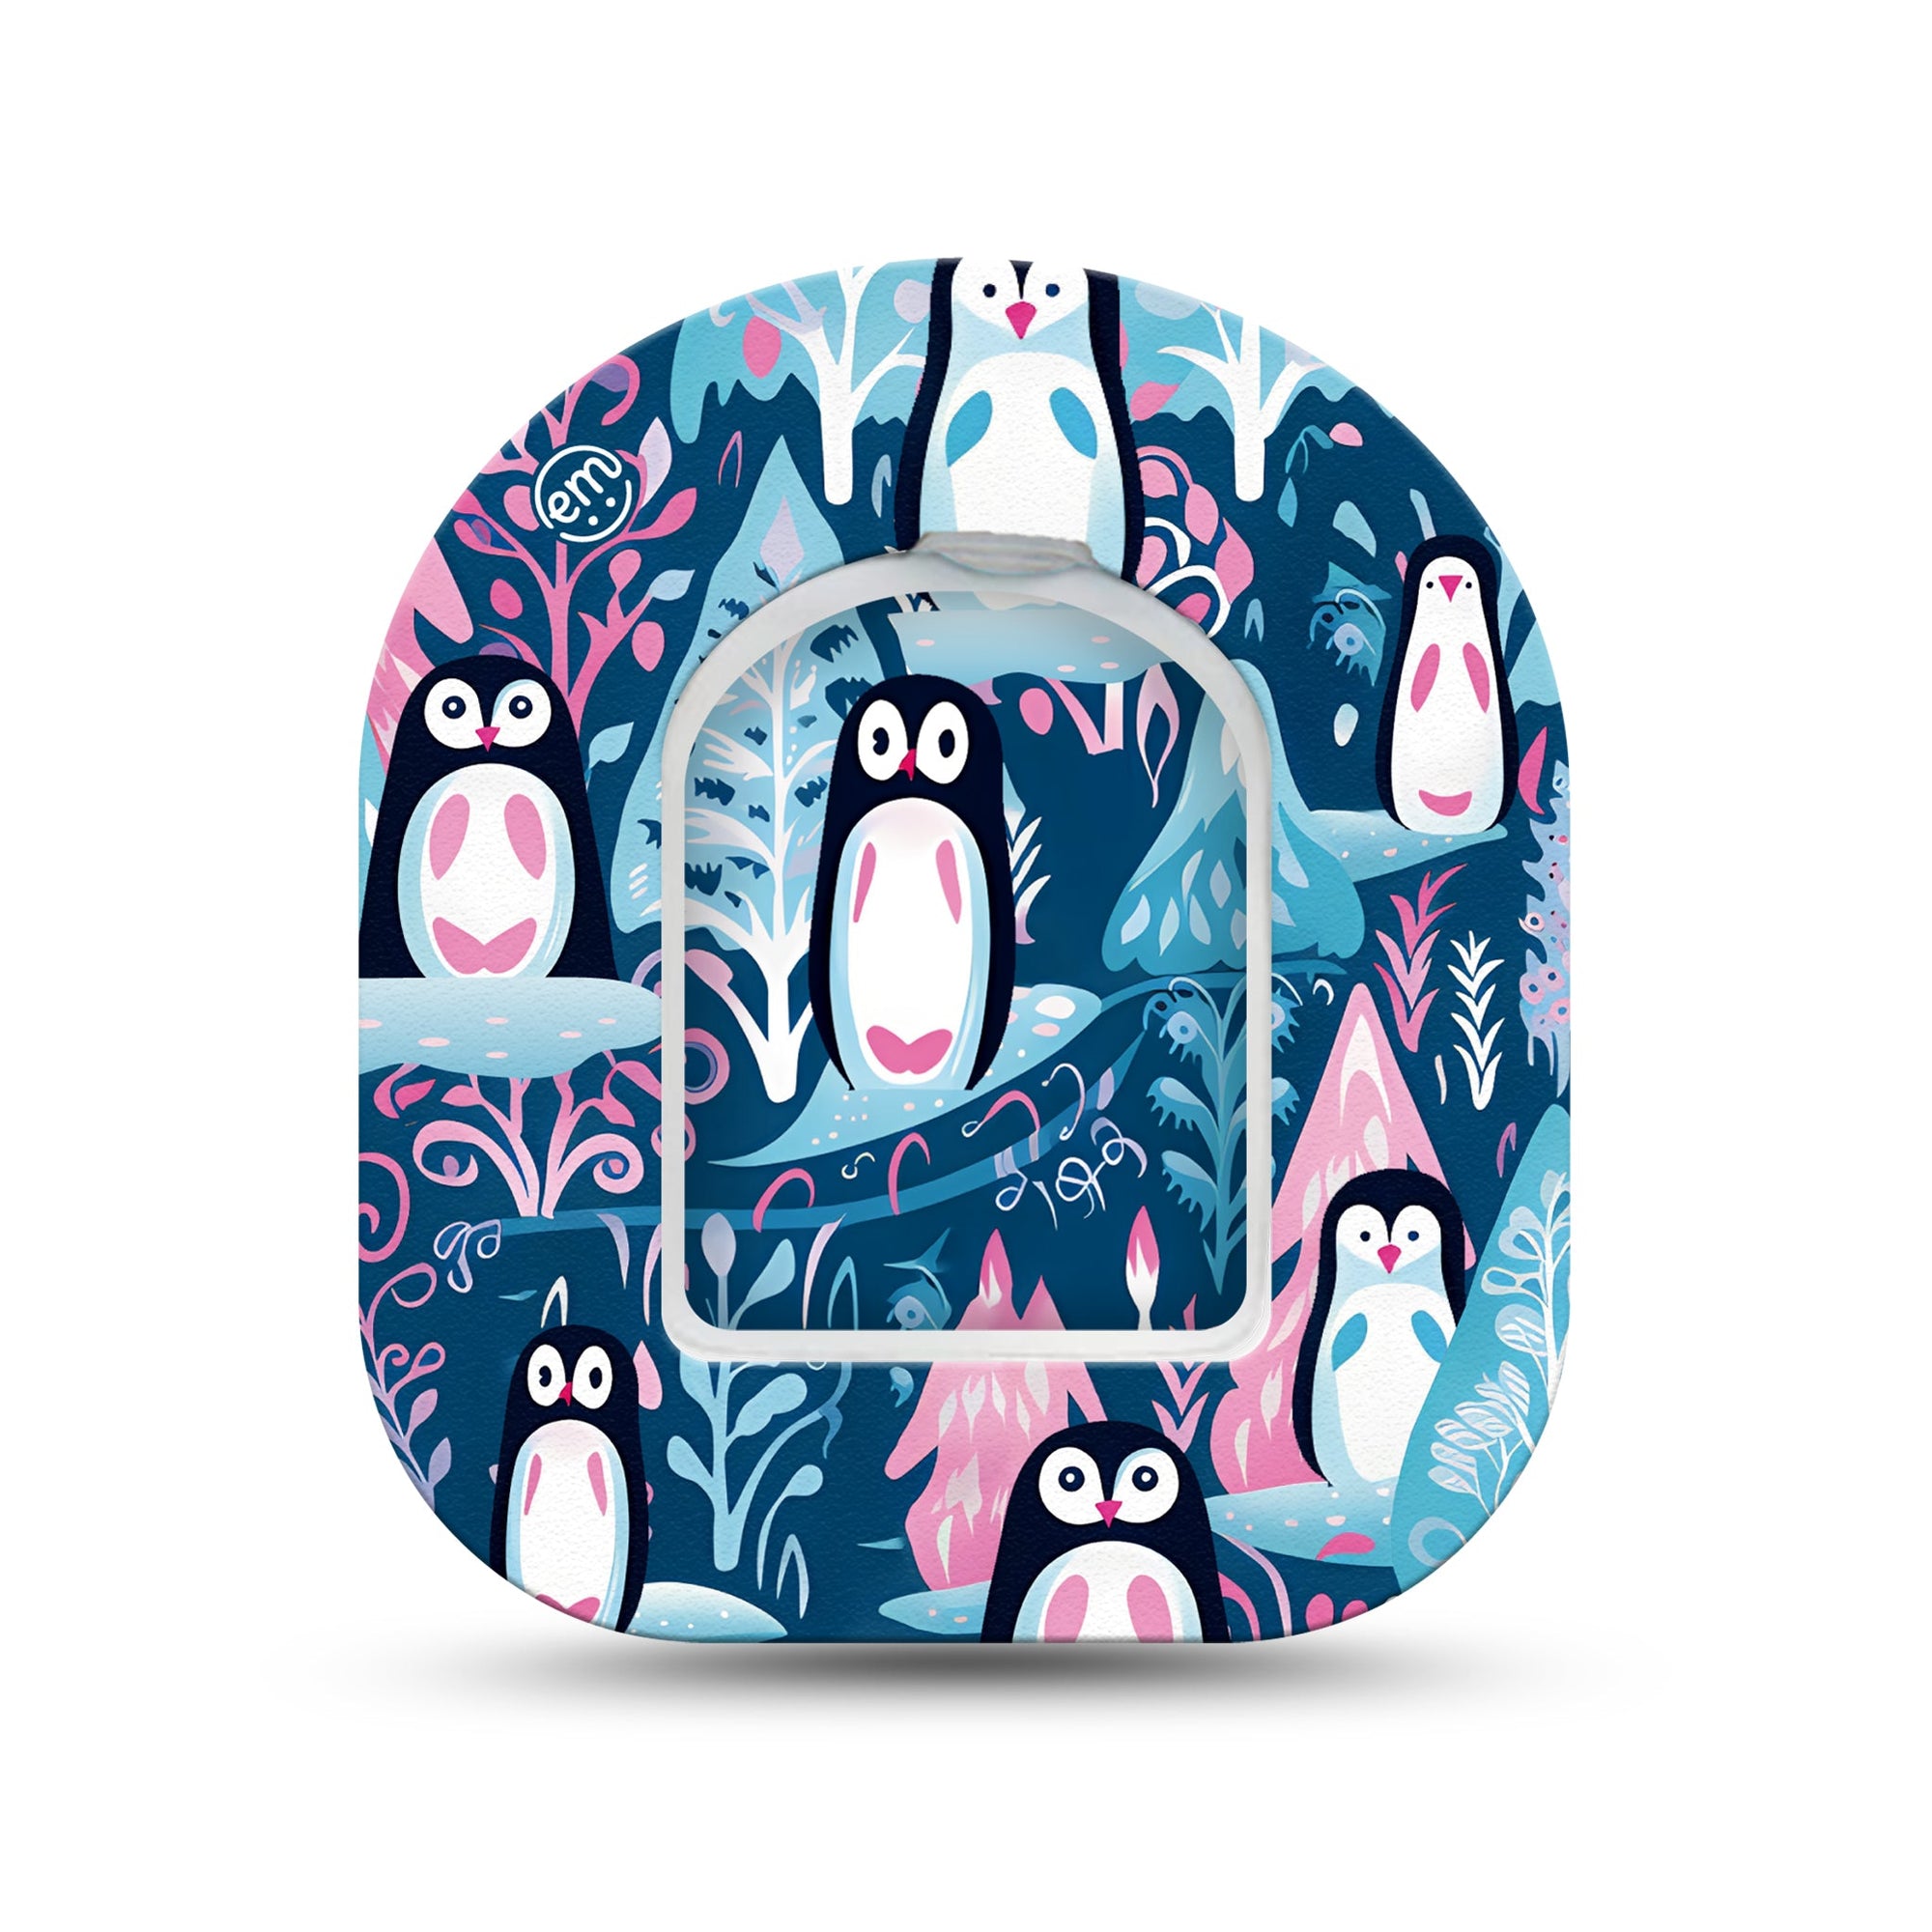 ExpressionMed Penguins Pod Mini Tape Single Sticker and Single Tape, Iceberg Dwellers Plaster Pump Design